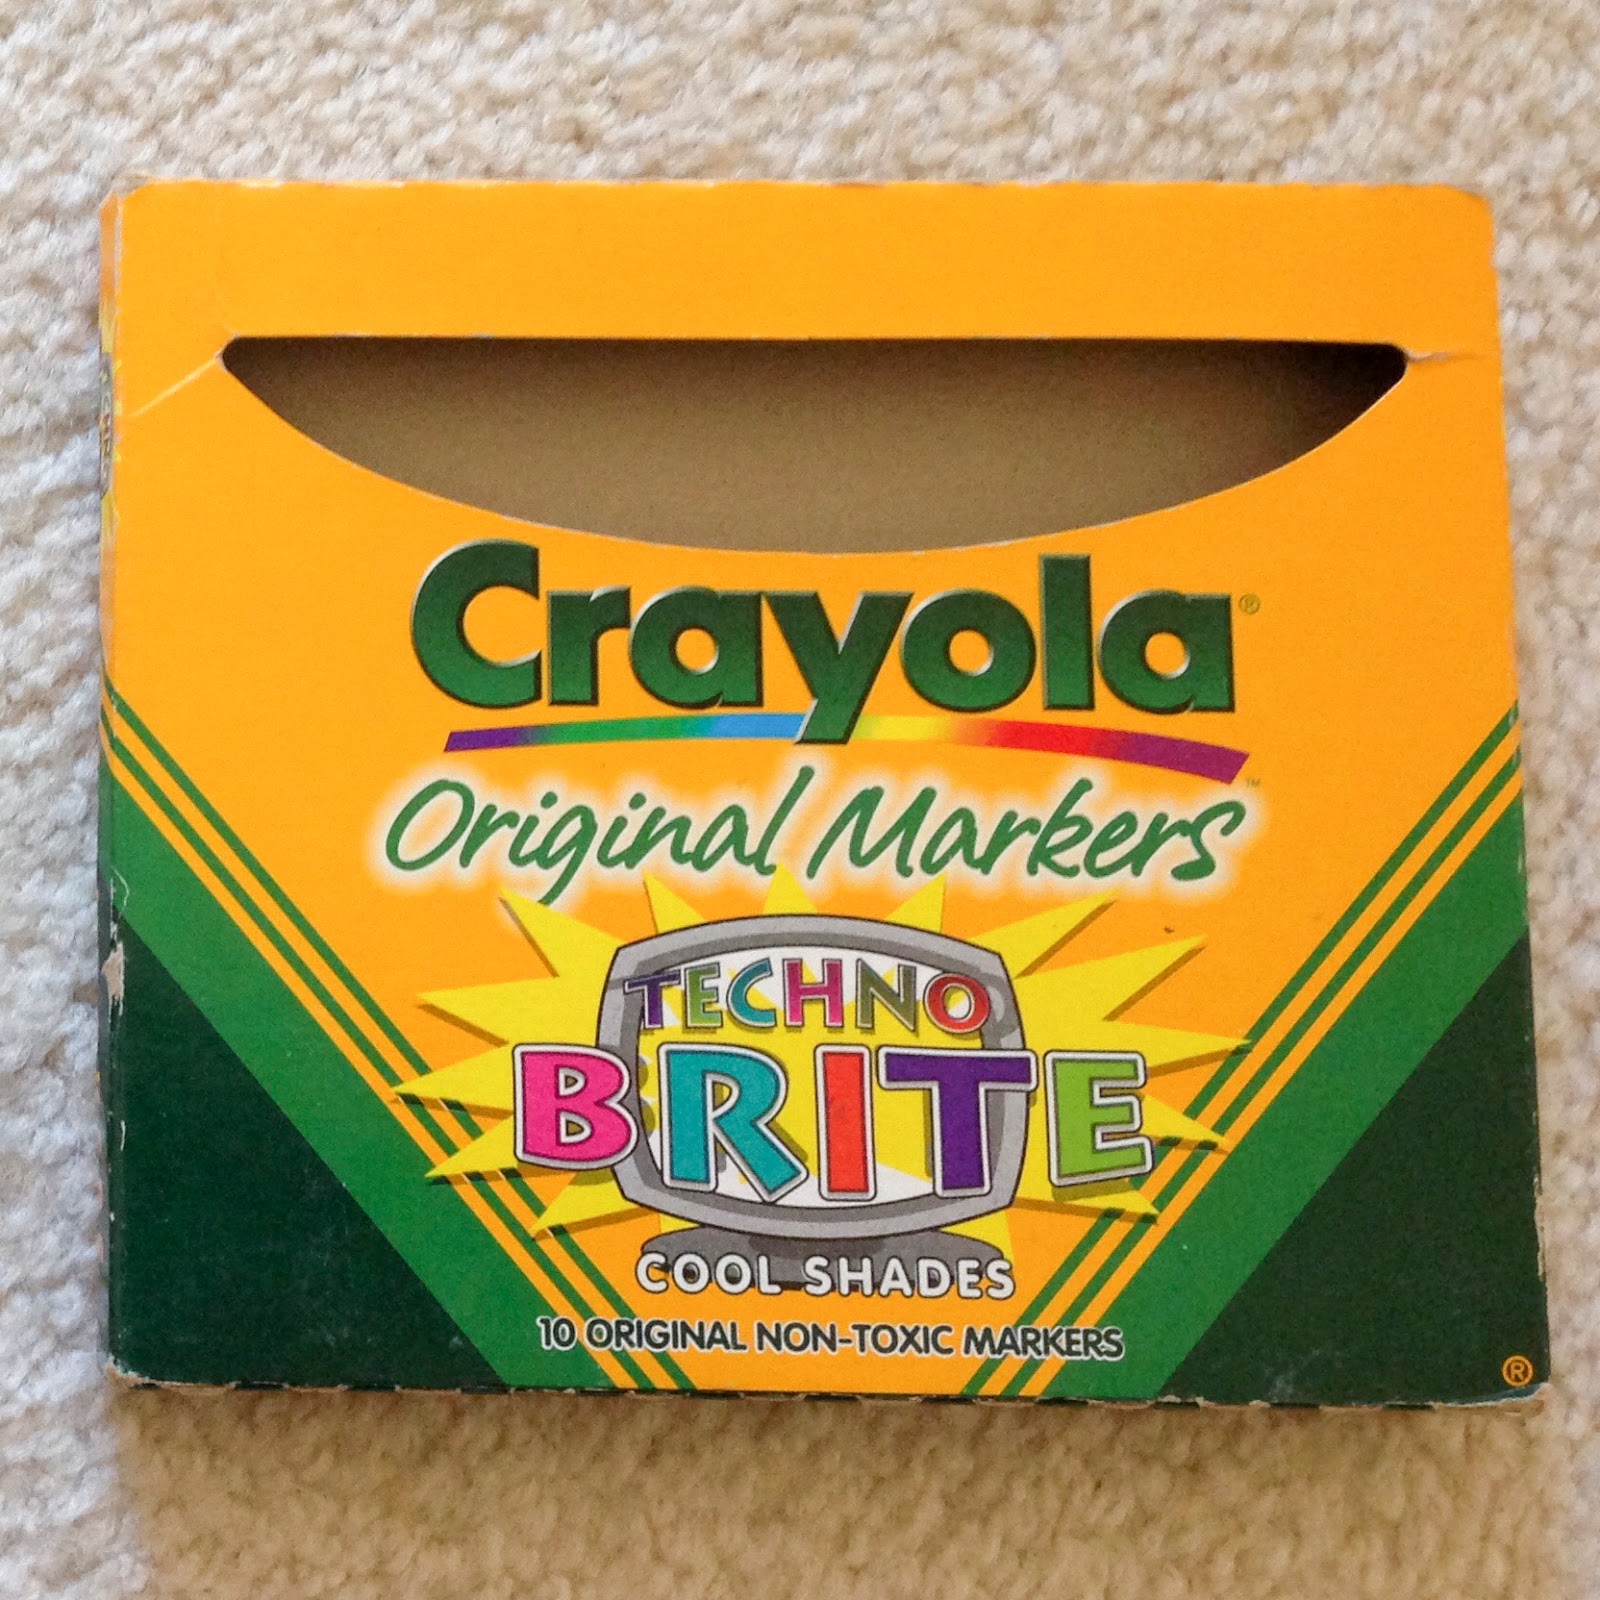 Crayola Metallic FX and Metallic Crayons: What's Inside the Box